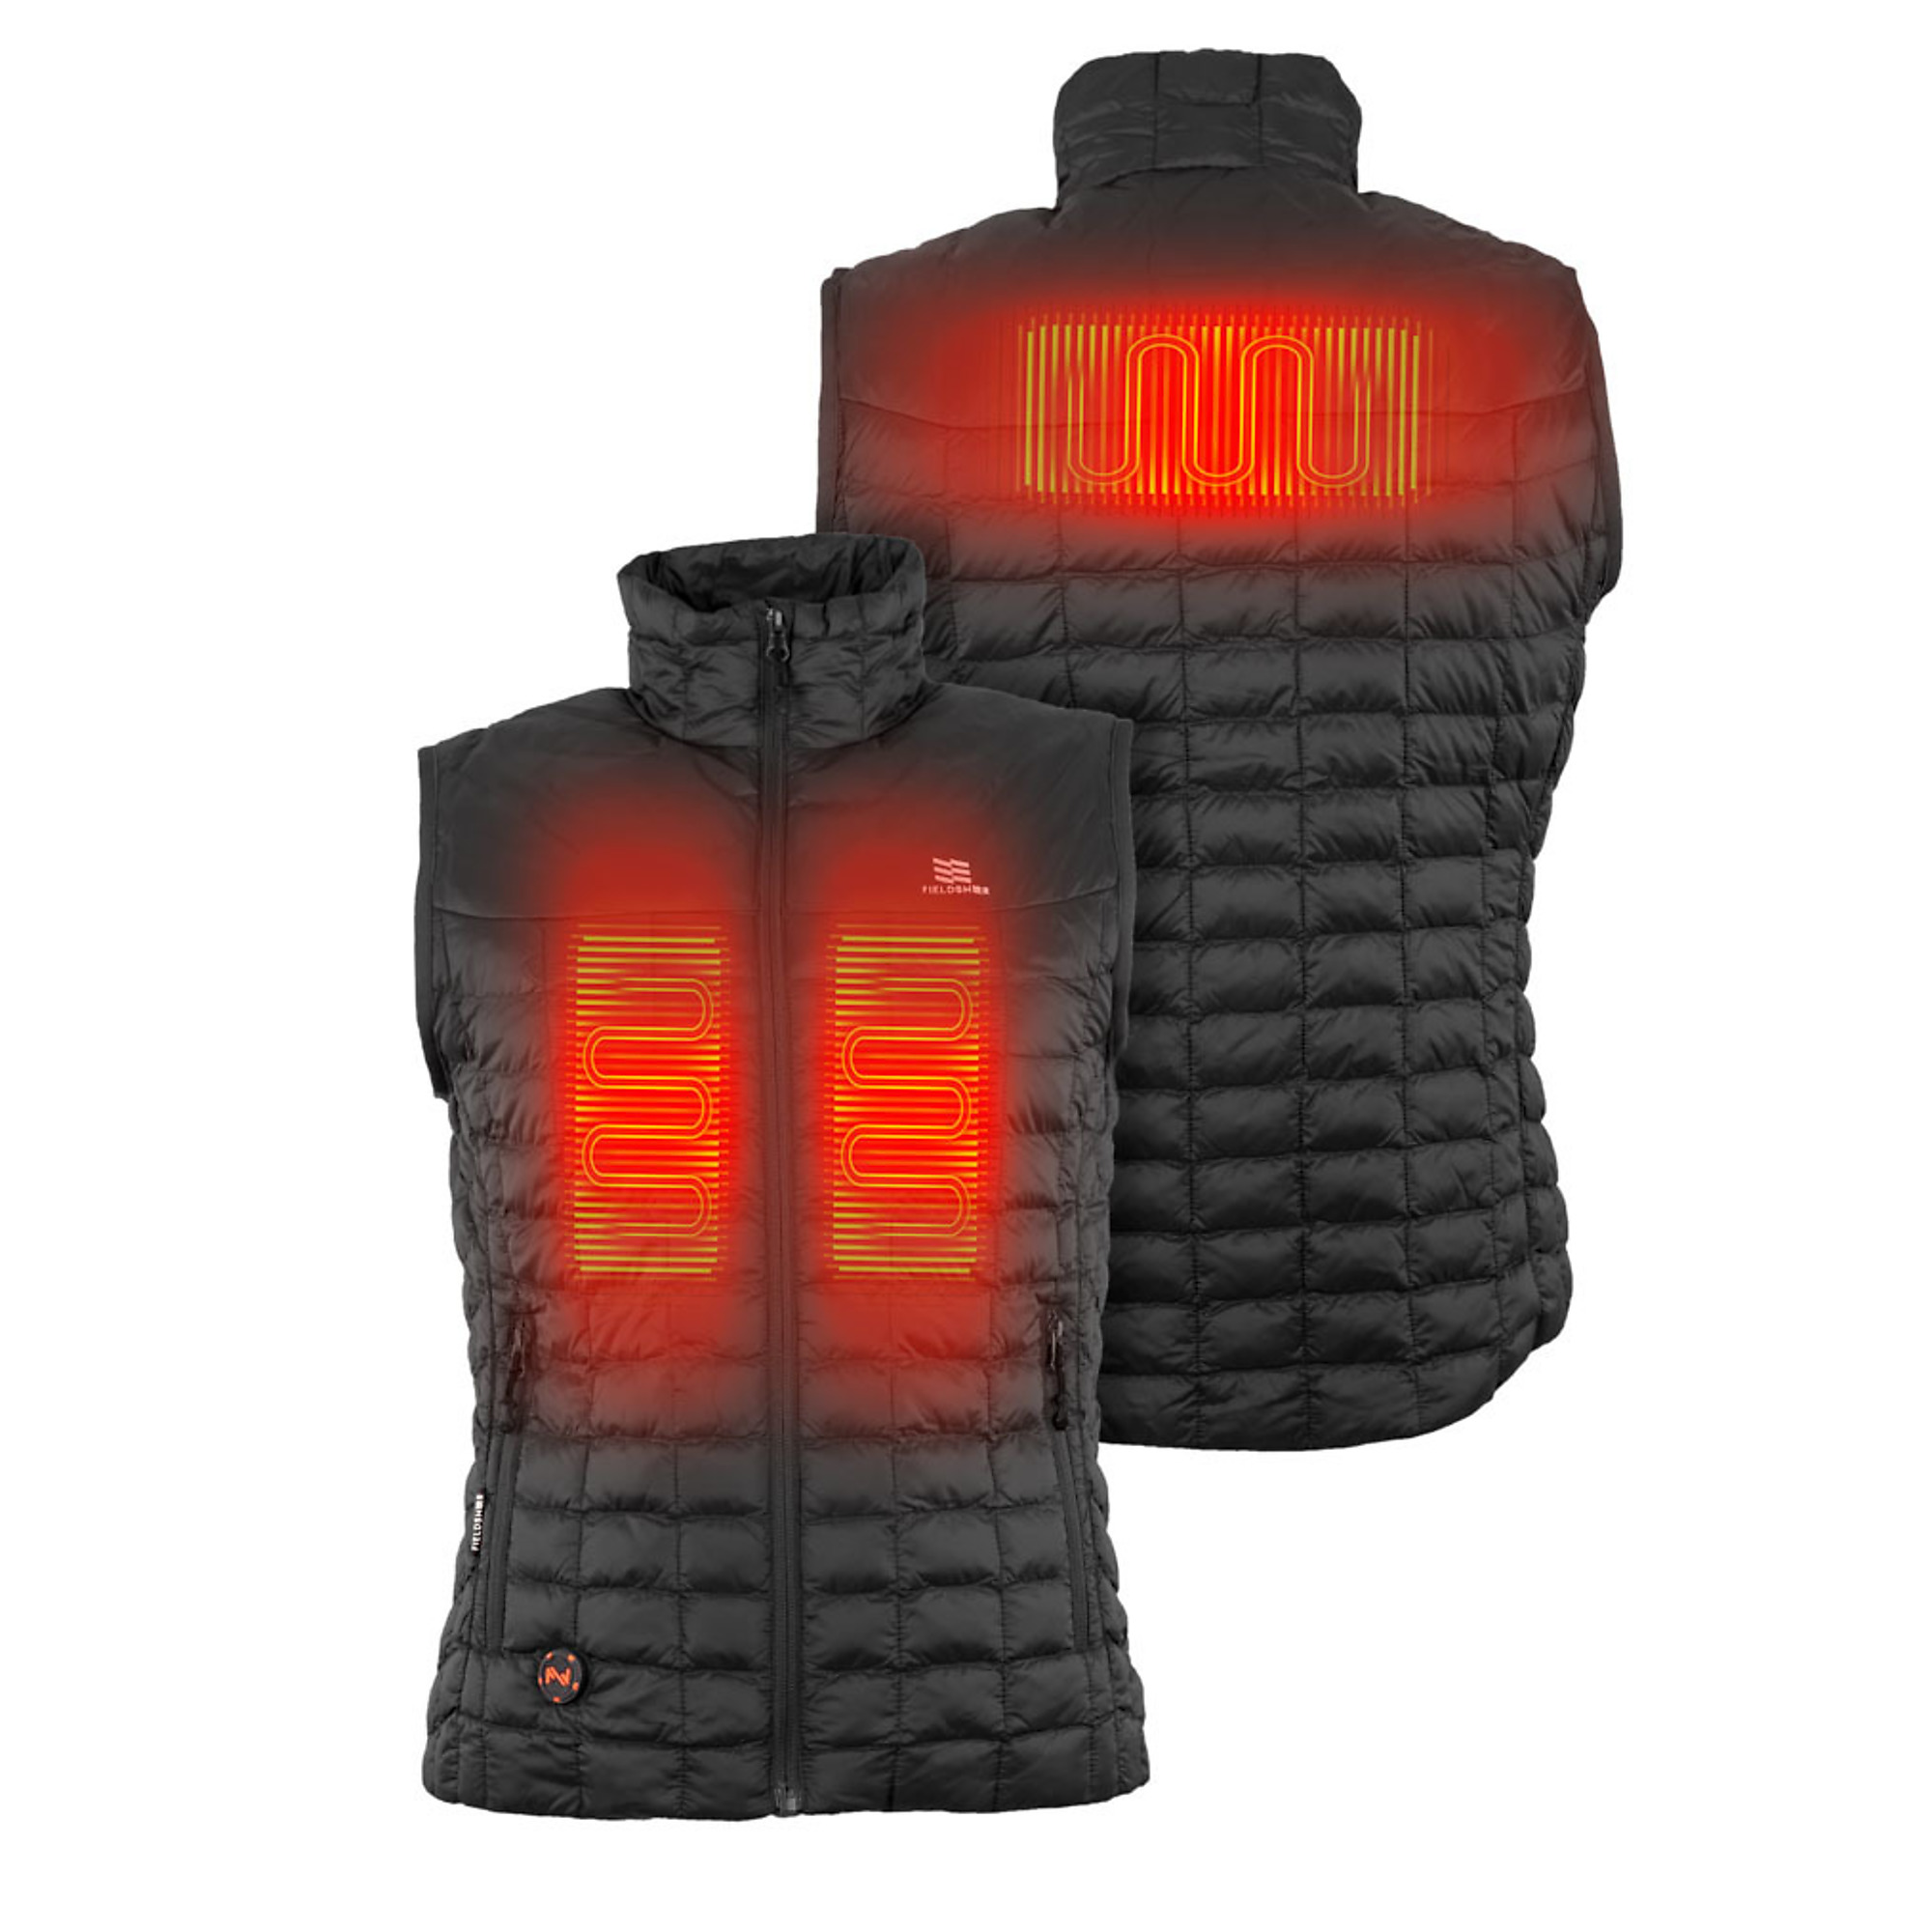 Fieldsheer, Women's 7.4v Backcountry Heated Vest, Size XS, Color Black, Model MWWV04010120